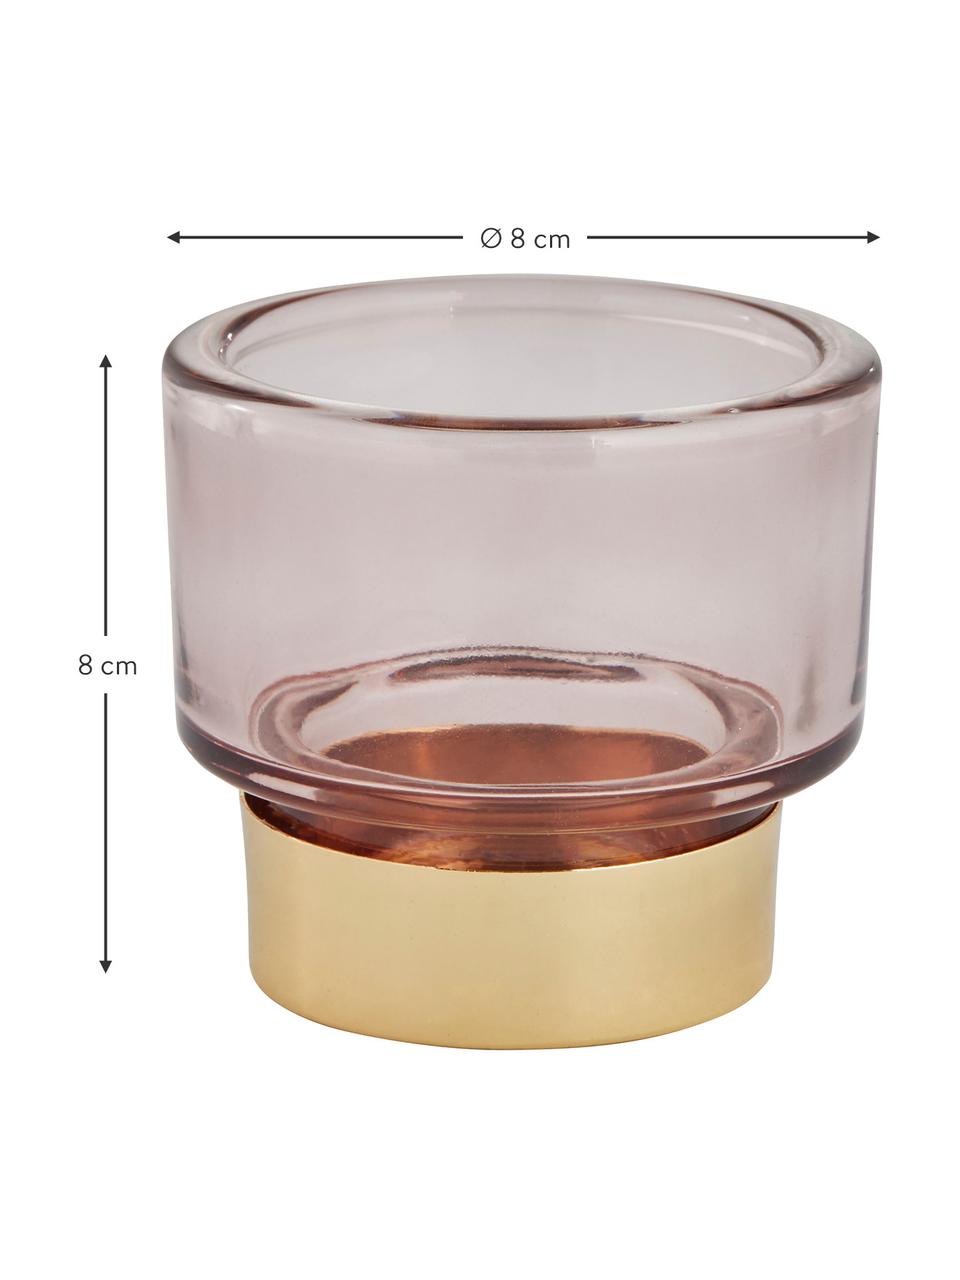 Handgemaakte waxinelichthouder Miy, Glas, Roze, transparant, goudkleurig, Ø 8 cm